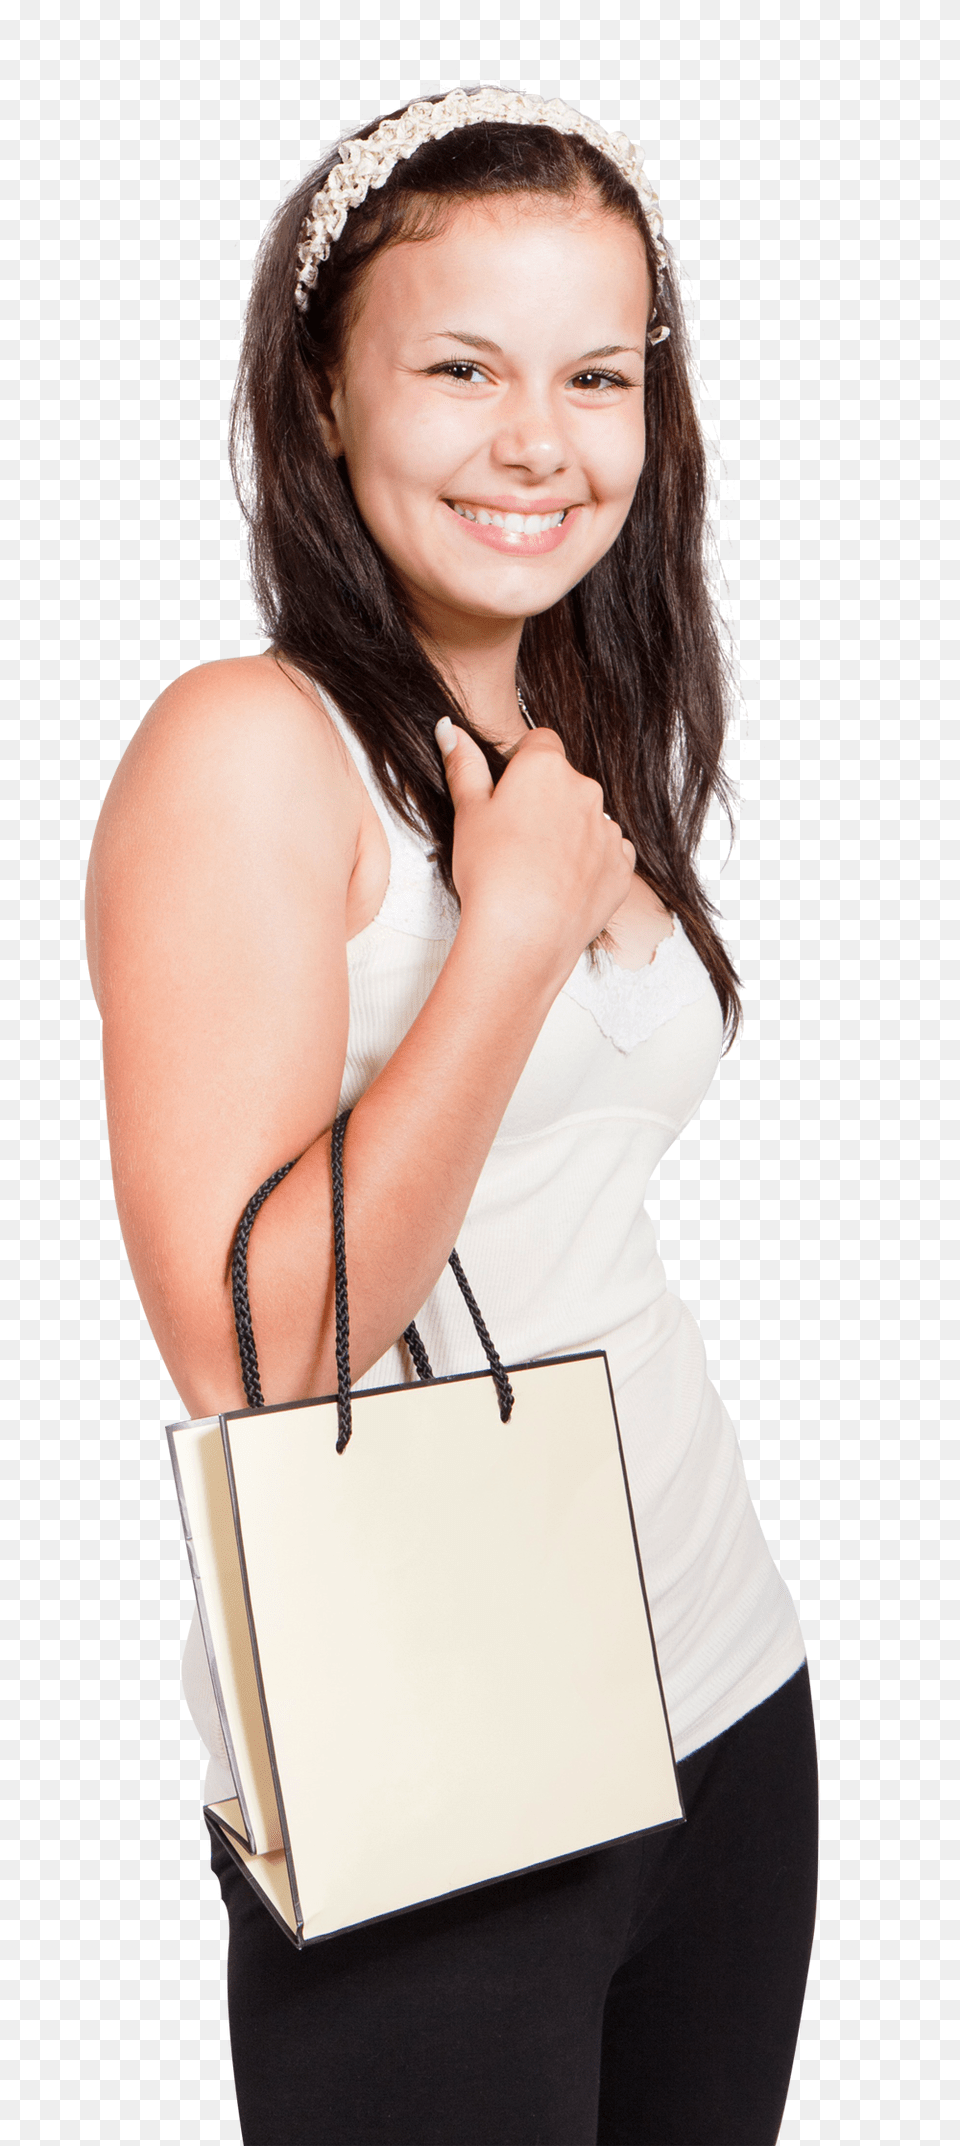 Pngpix Com Girl Holding Shopping Bag Image, Accessories, Handbag, Adult, Female Free Png Download